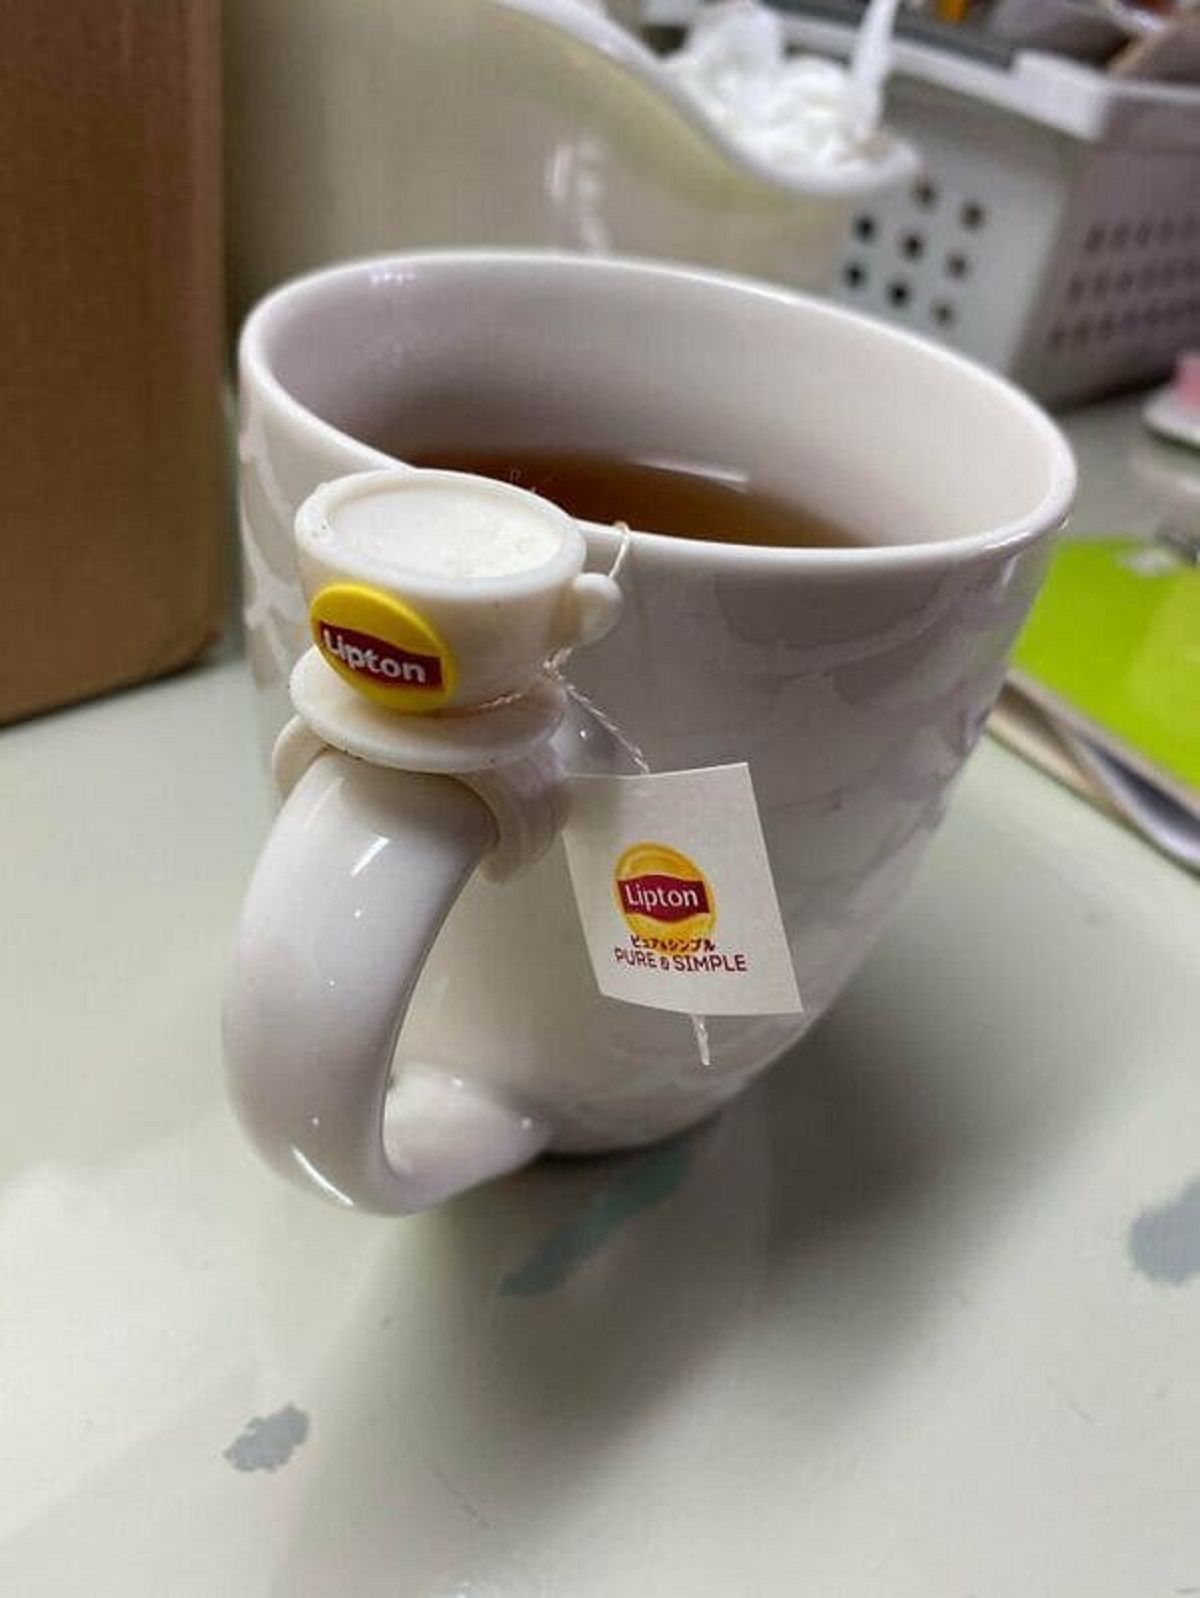 “My Lipton Tea Came With A Teacup Shaped Tea Bag Holder”